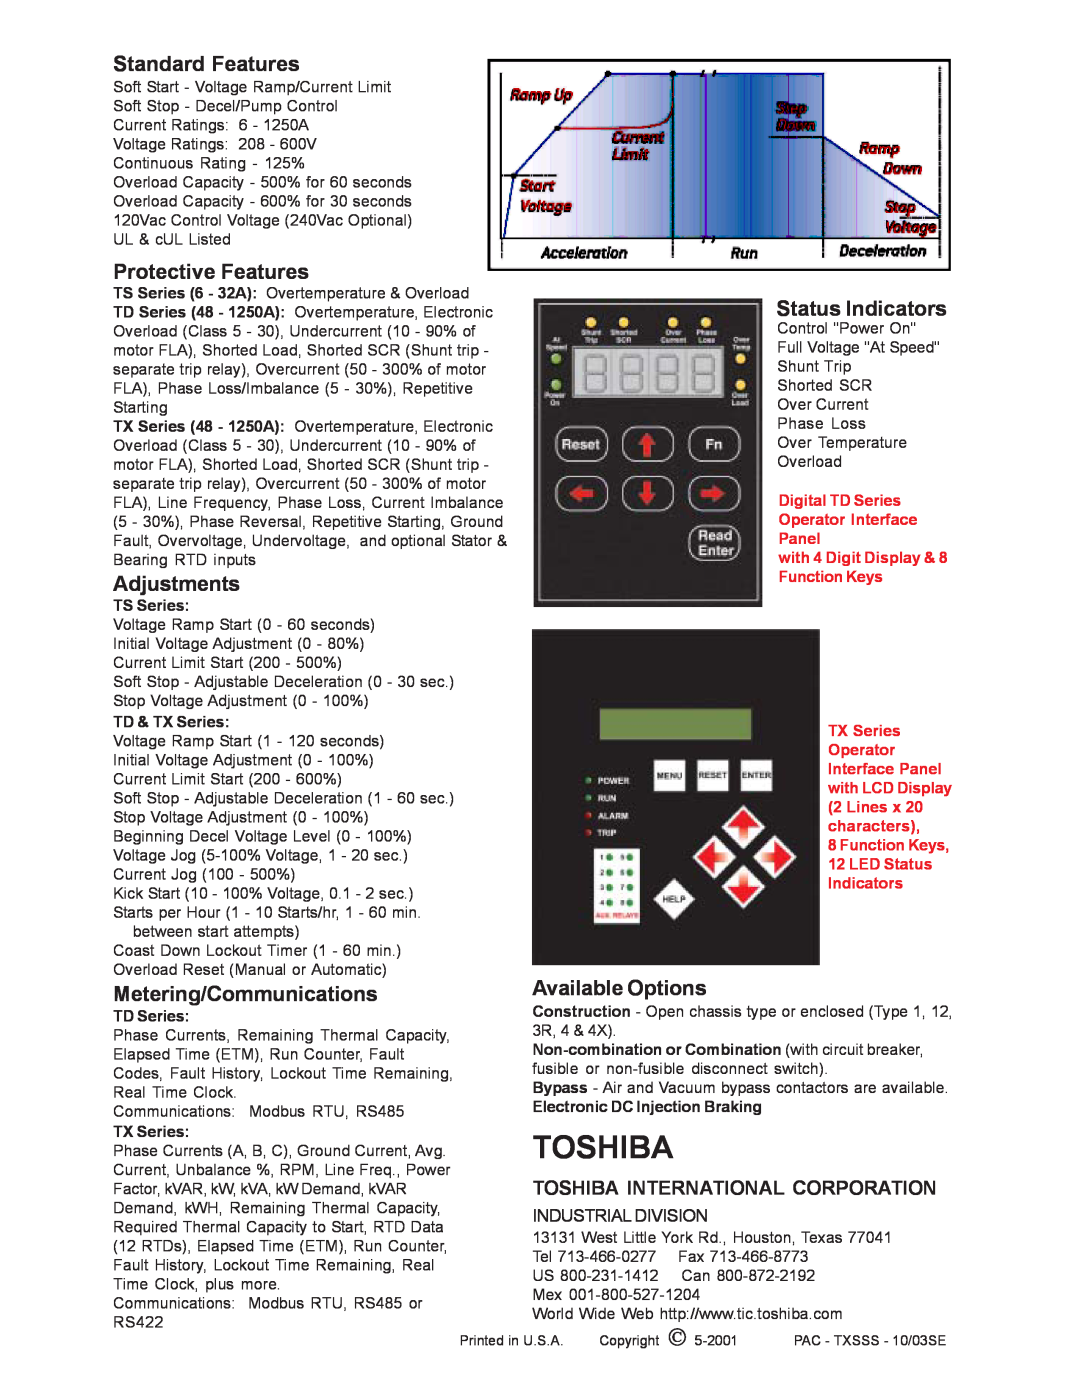 Toshiba TX Series Toshiba International Corporation, Industrial Division, Digital TD Series Operator Interface Panel 